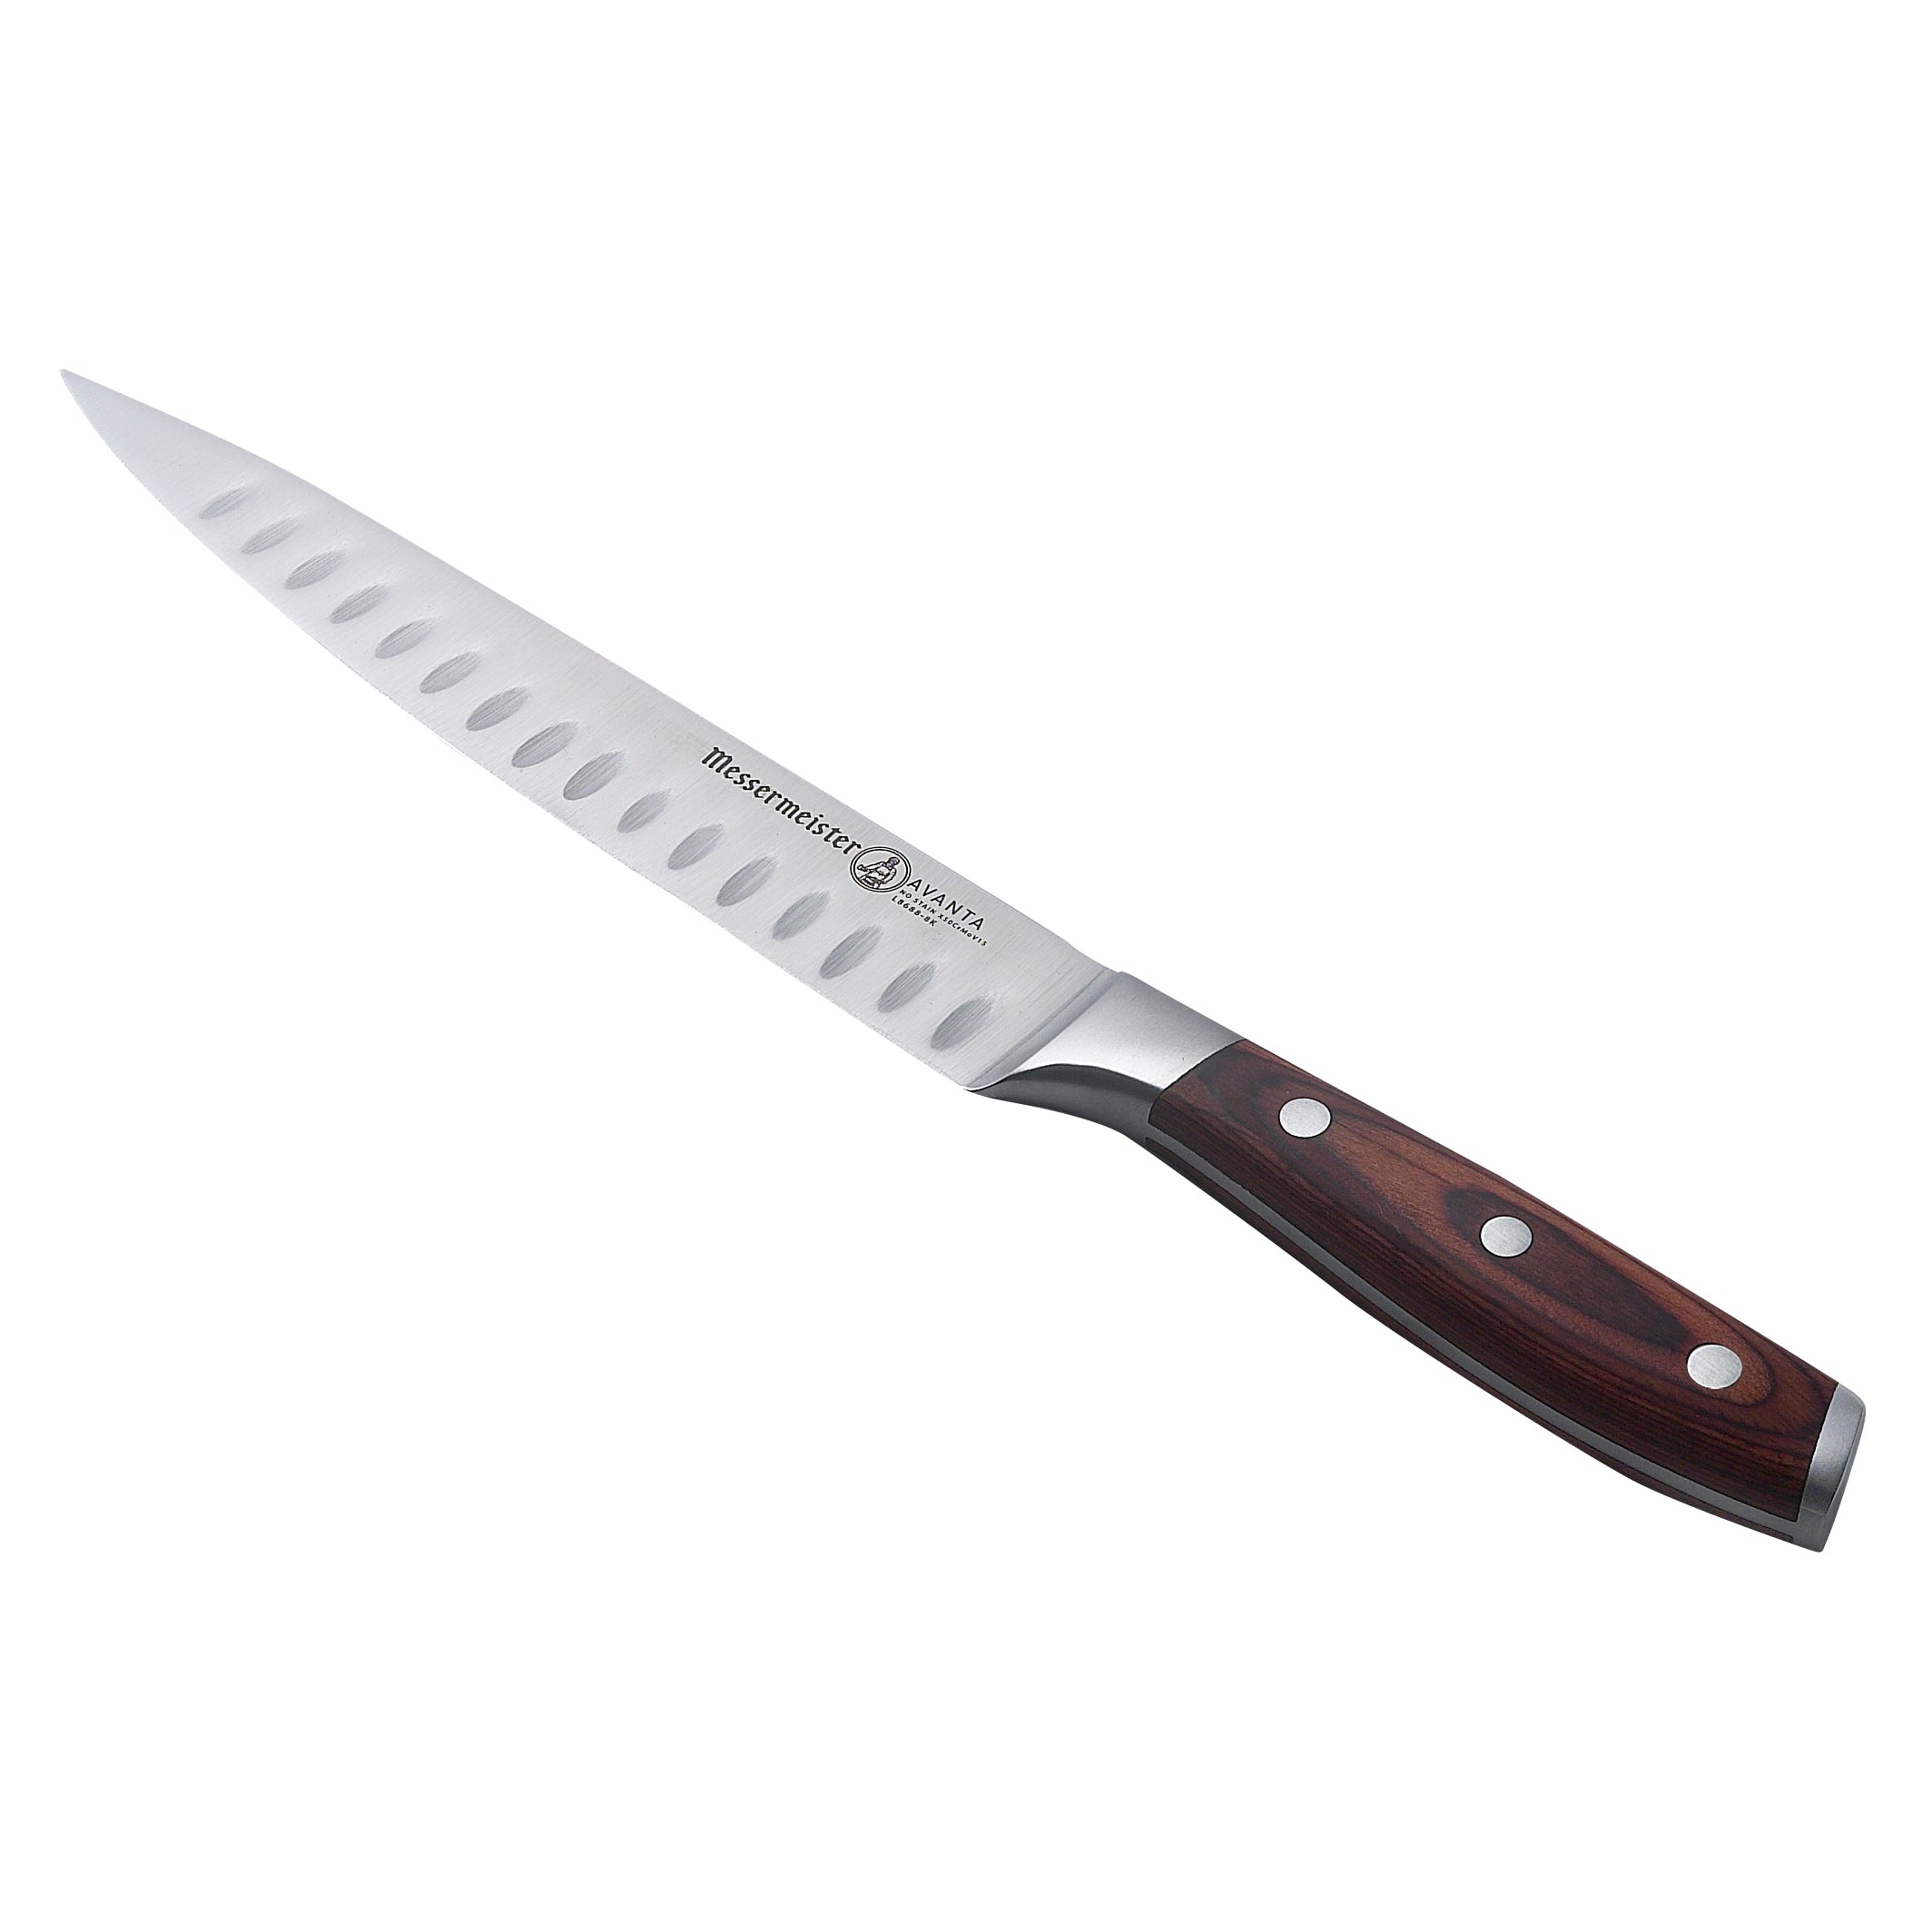 UPSCALE CALPHALON STEAK KNIVES KNIFE SET OF 8 TABLEWARE SERRATED